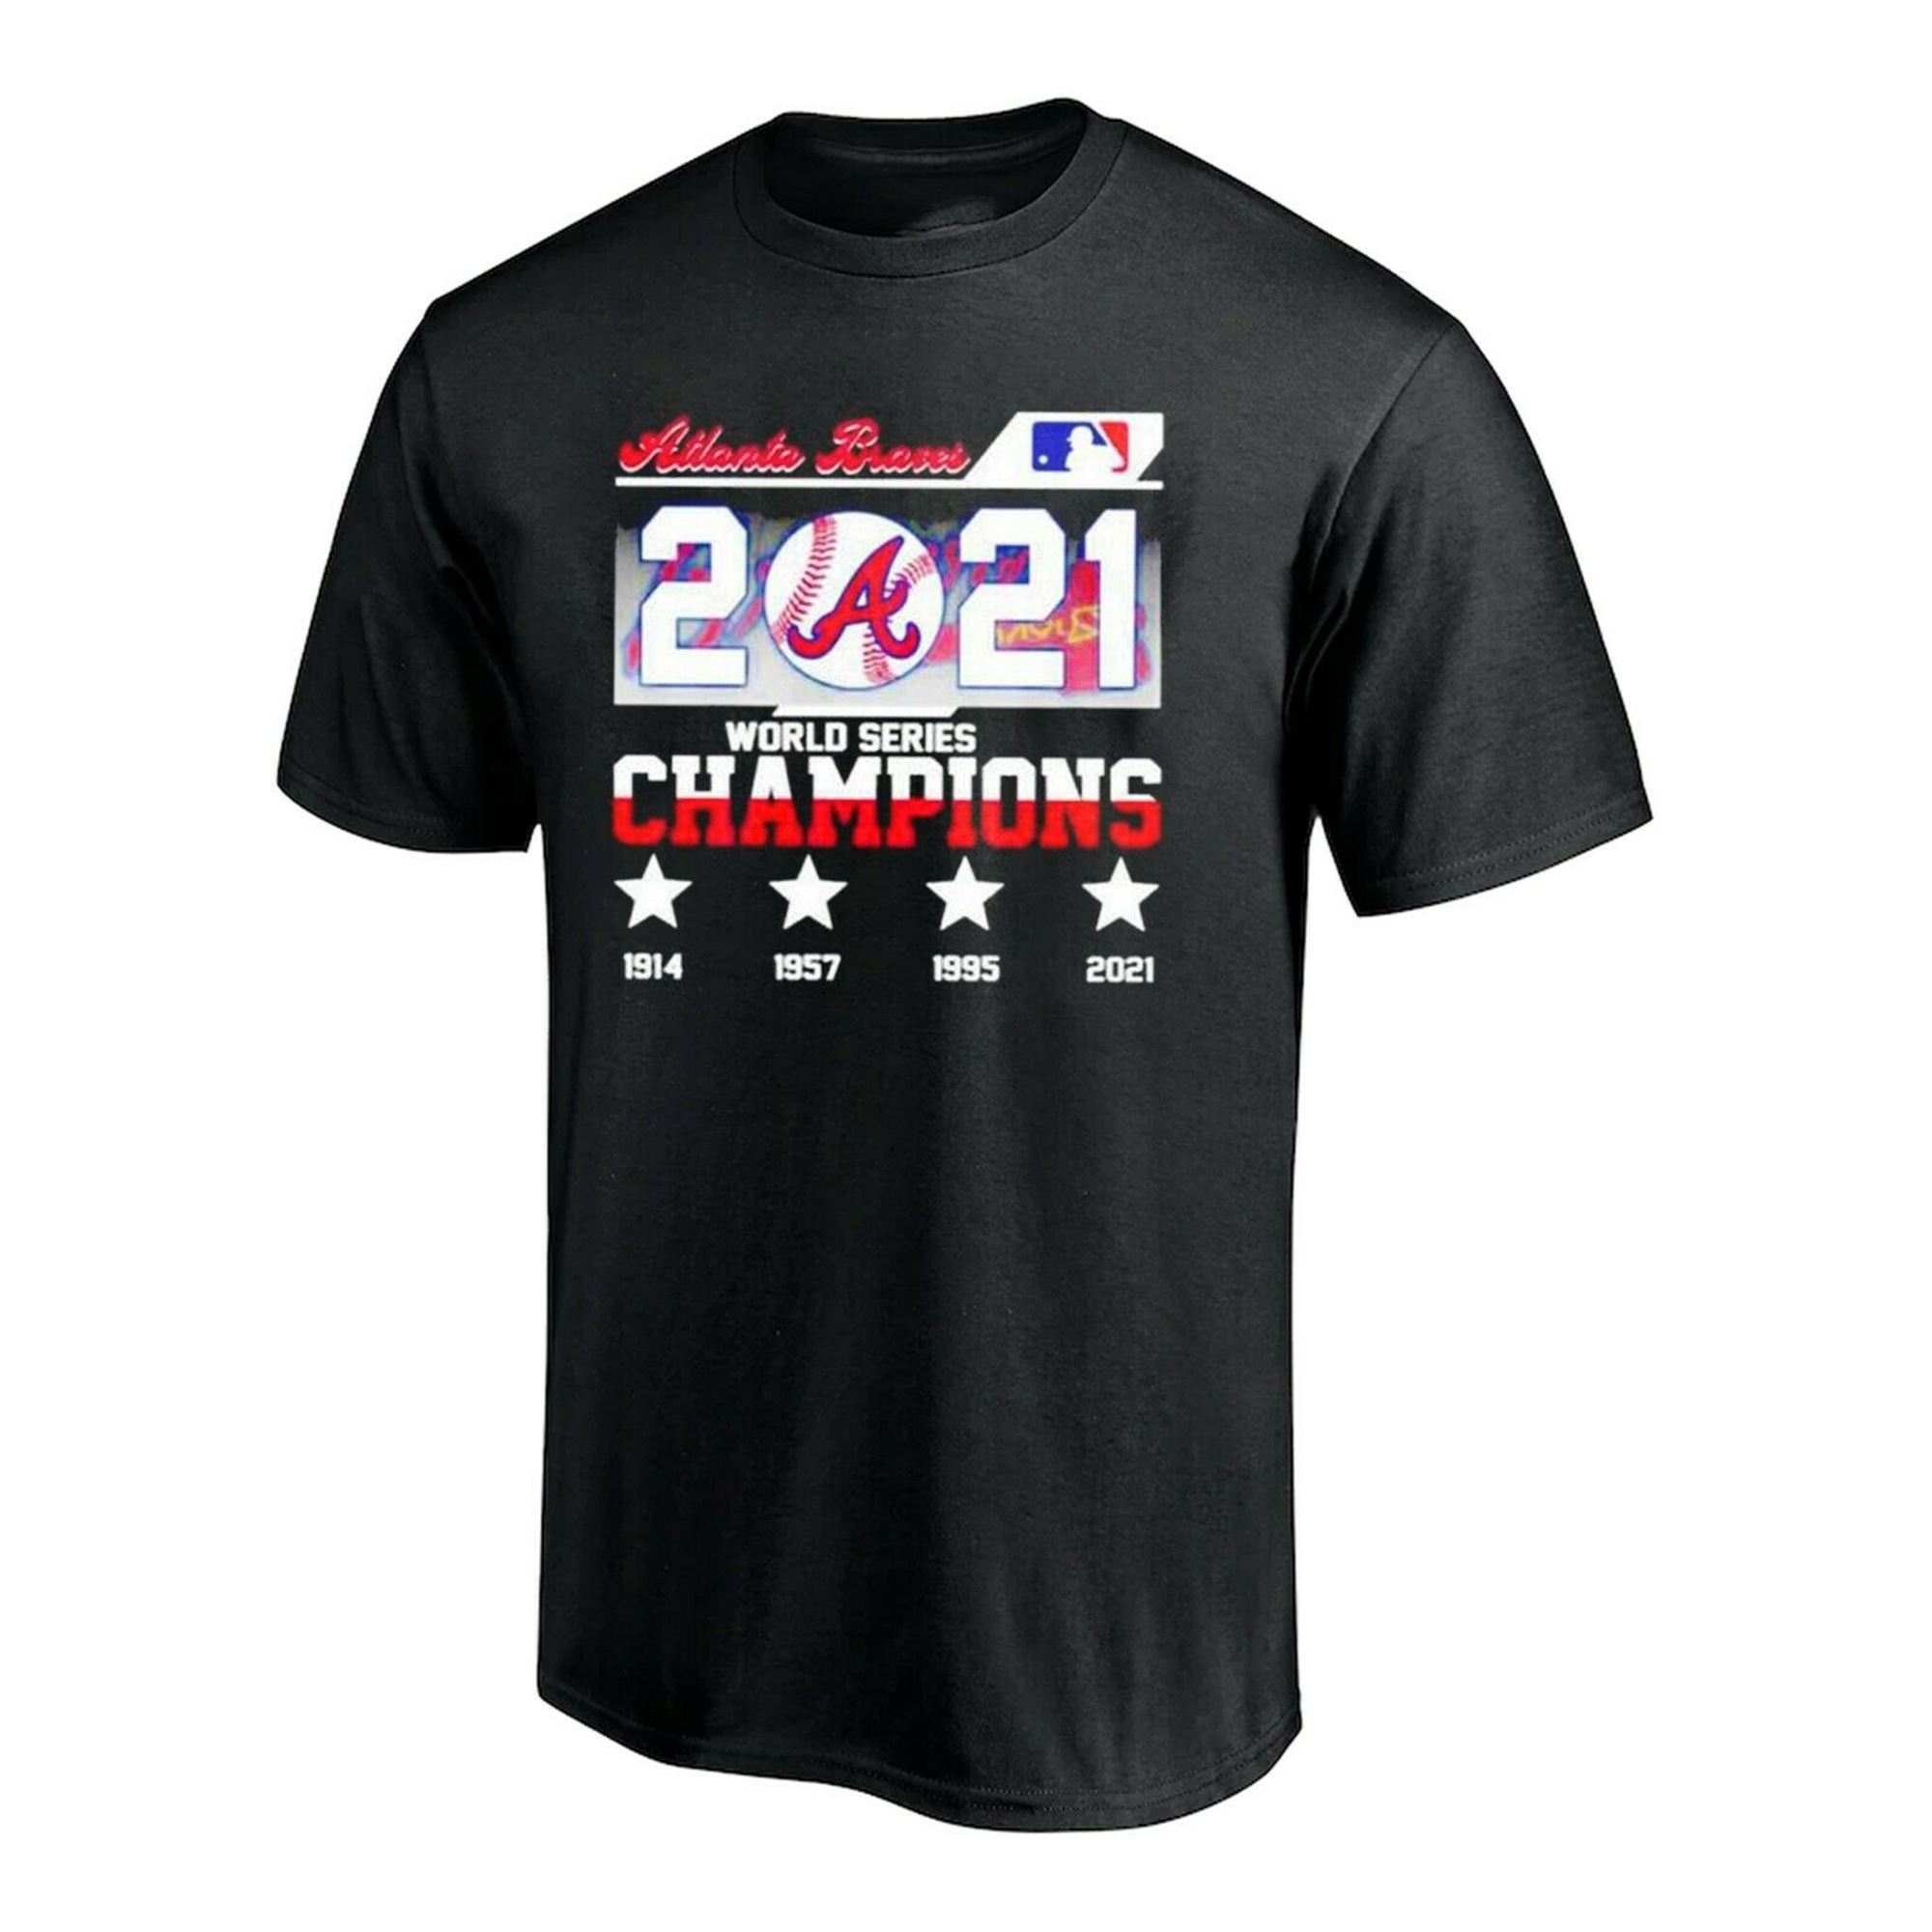 Braves 2021 World Series Champs Atlanta Braves 4 Times Champions T-shirt